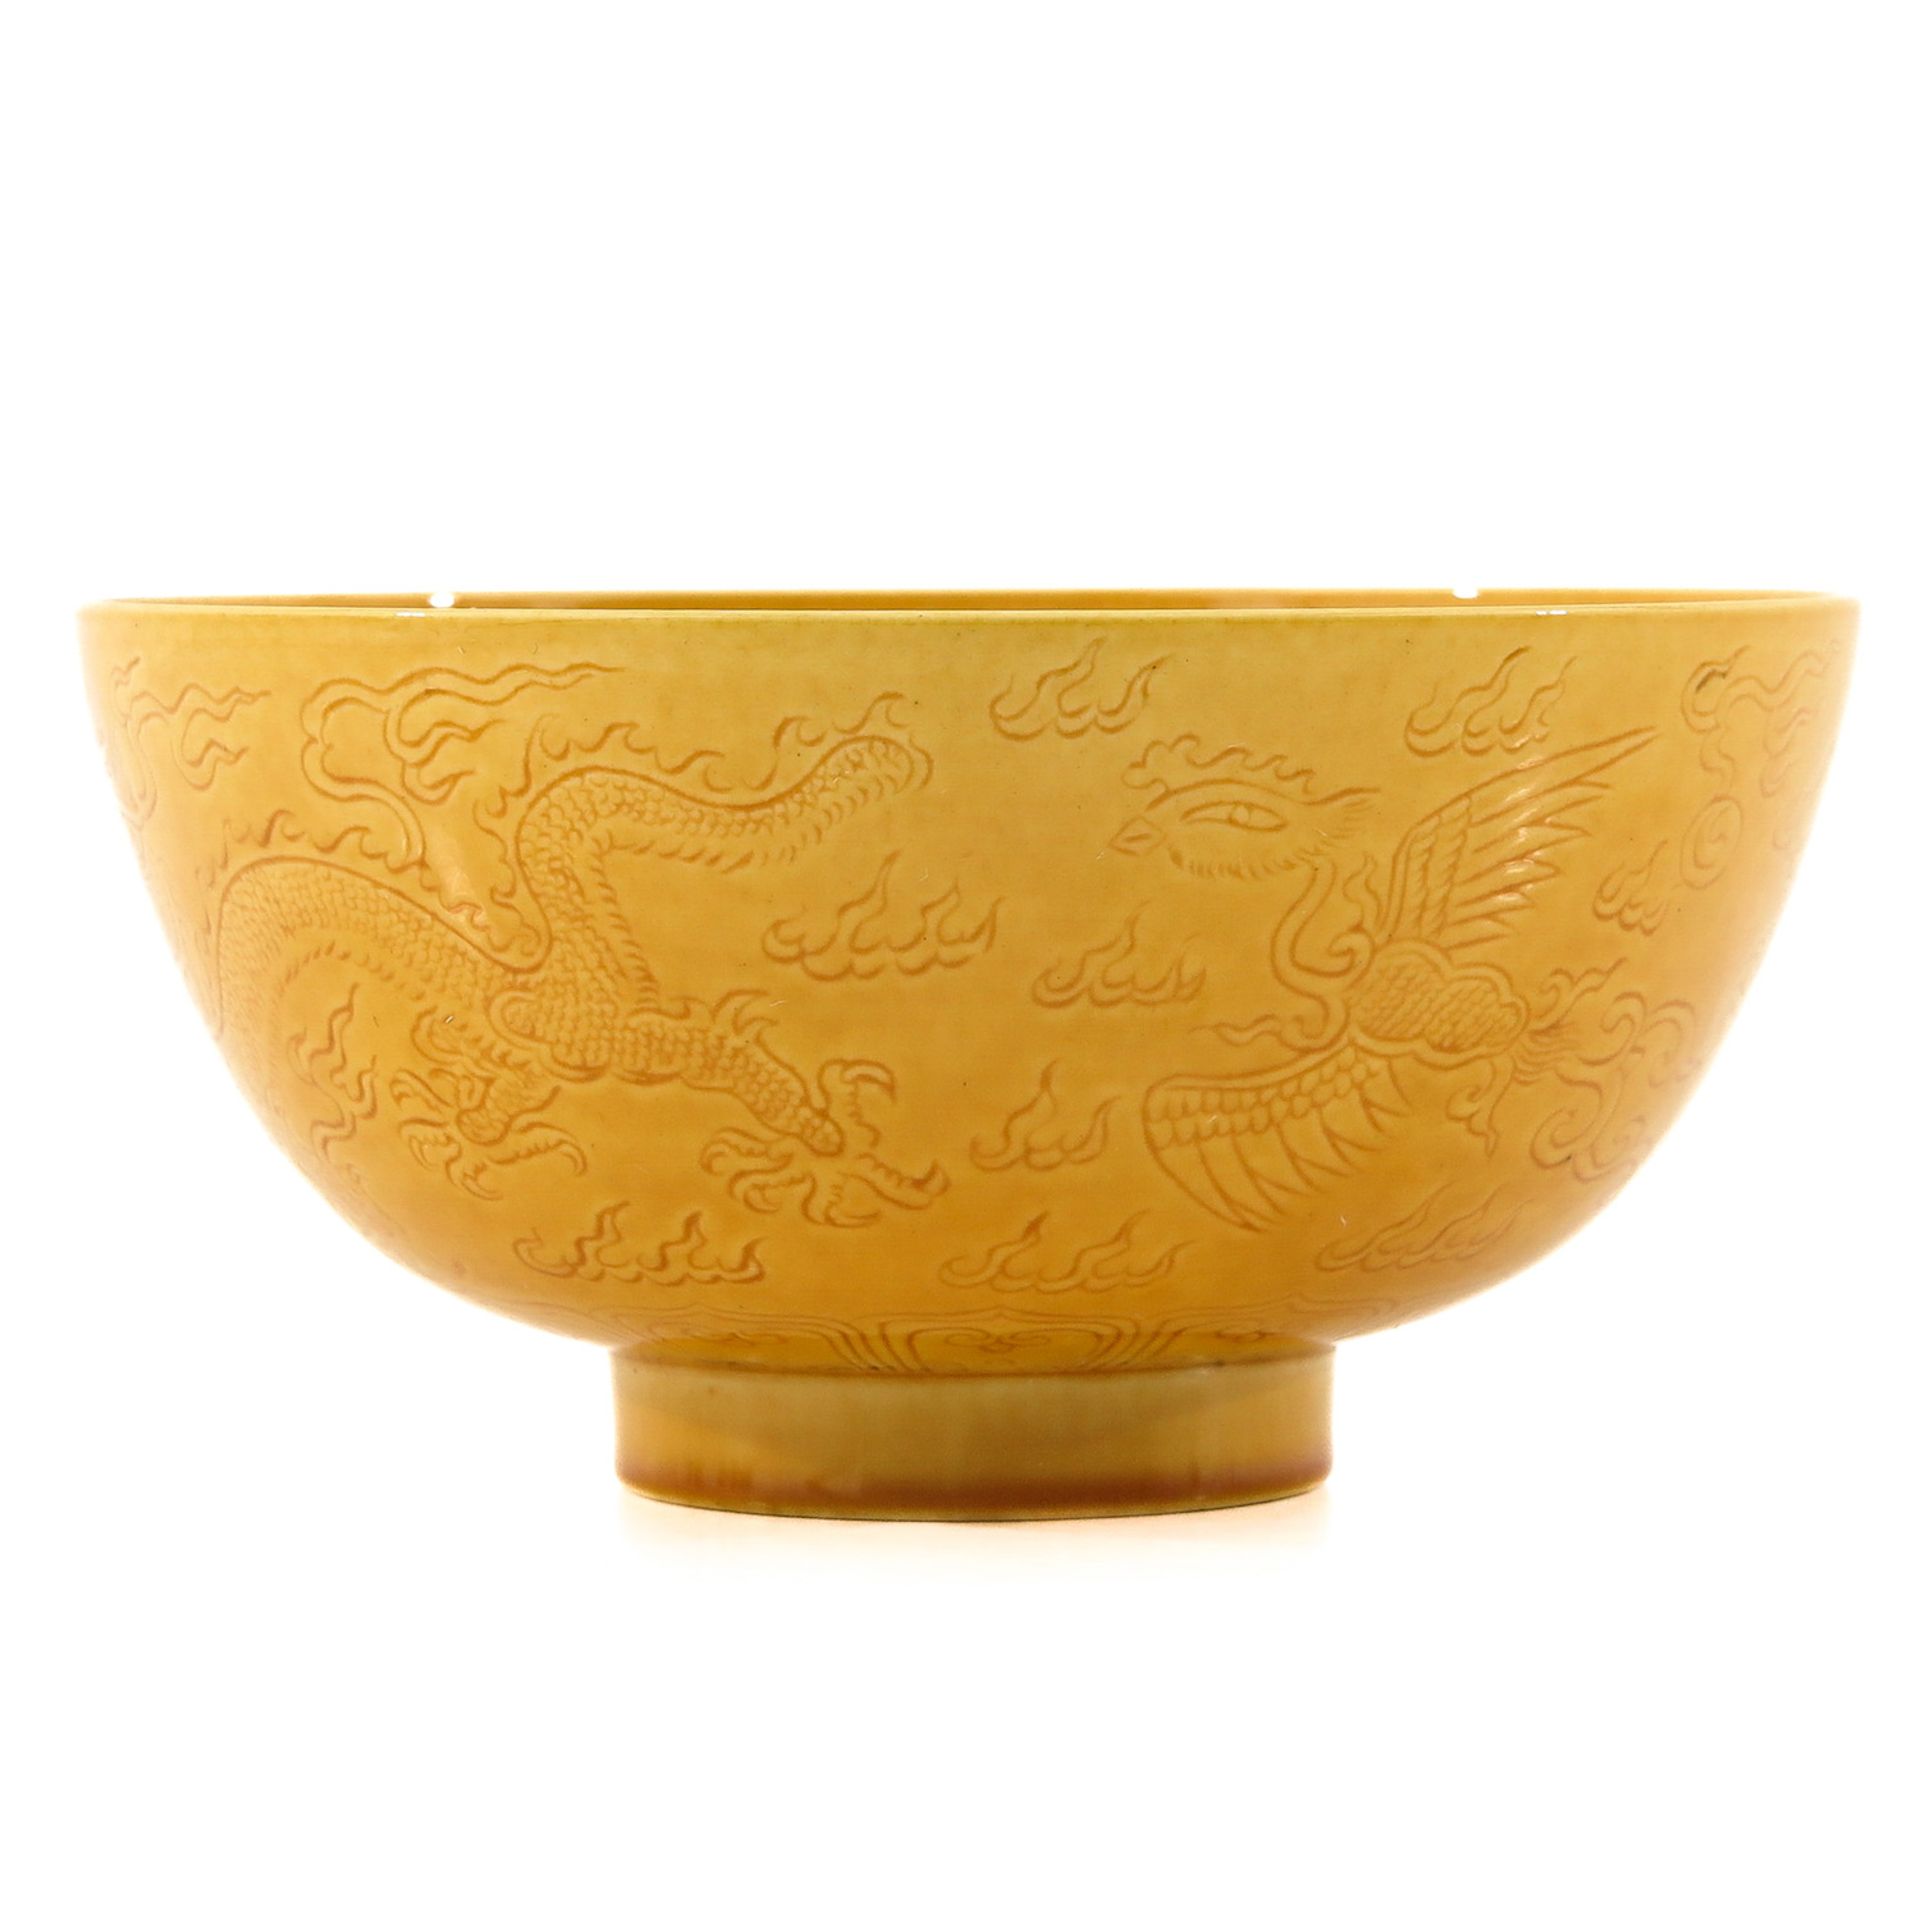 A Yellow Glaze Bowl - Image 4 of 10